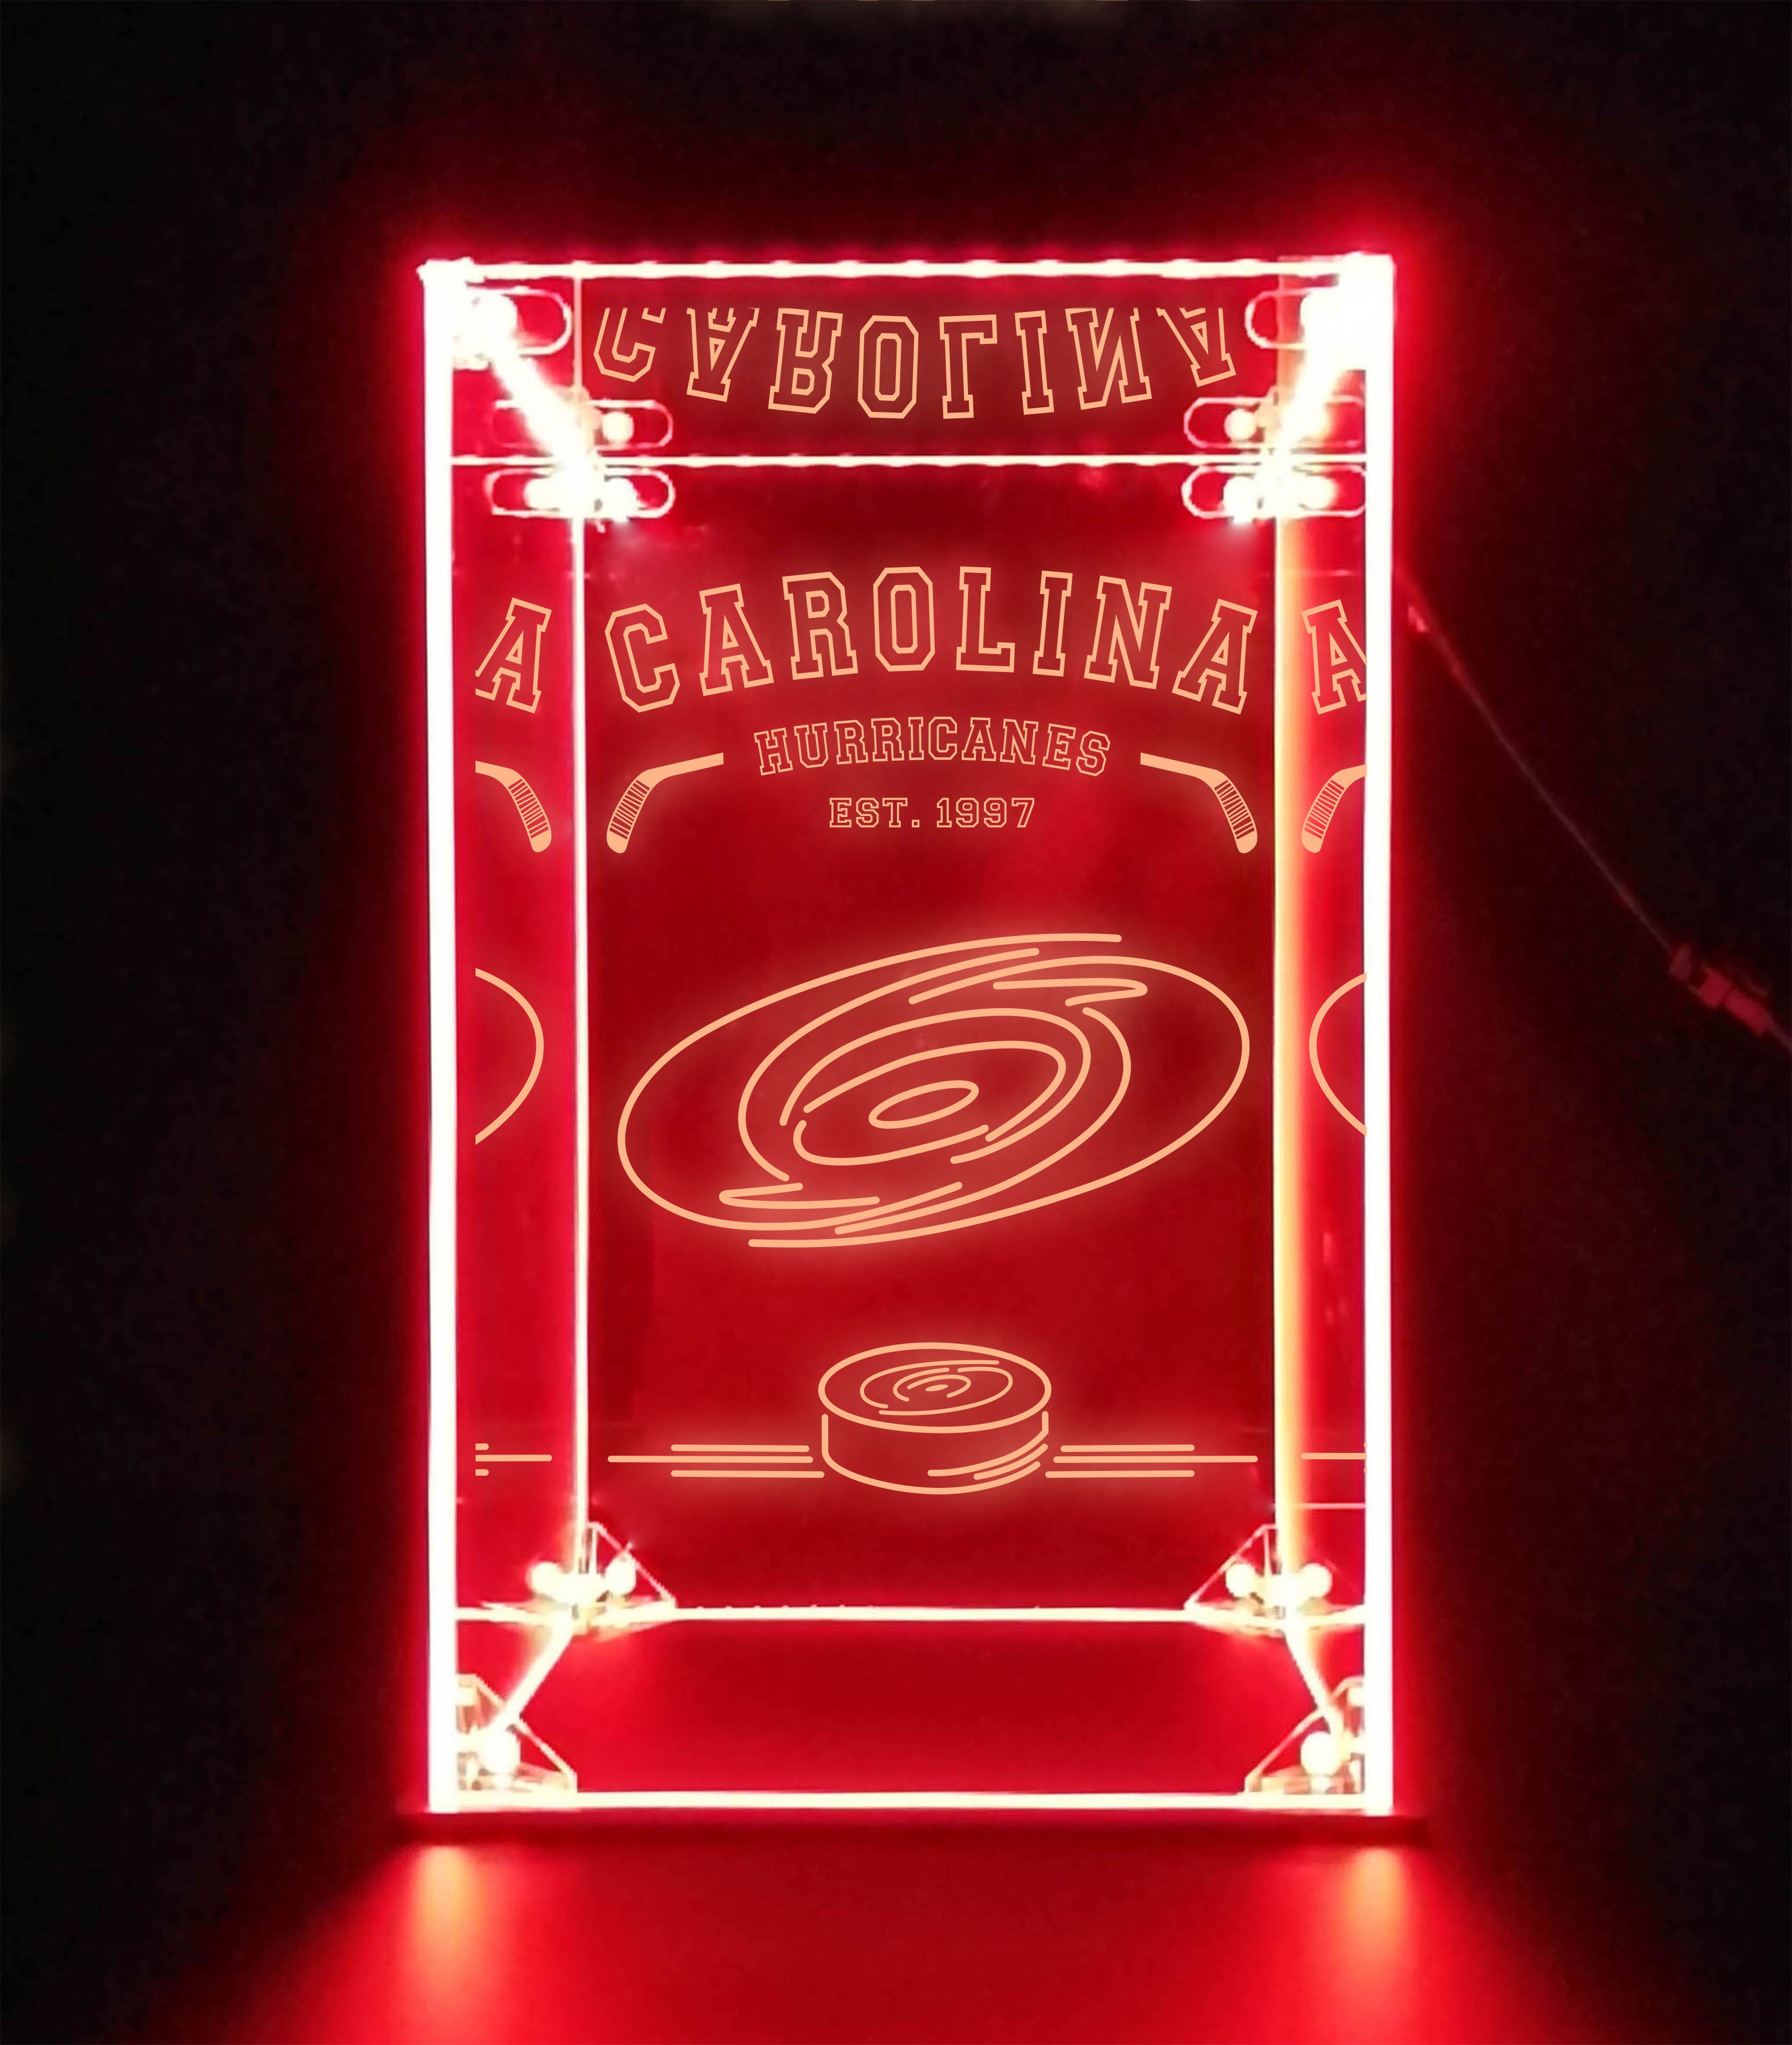 LED Display Case For Carolina Hurricanes Sports Memorabilia